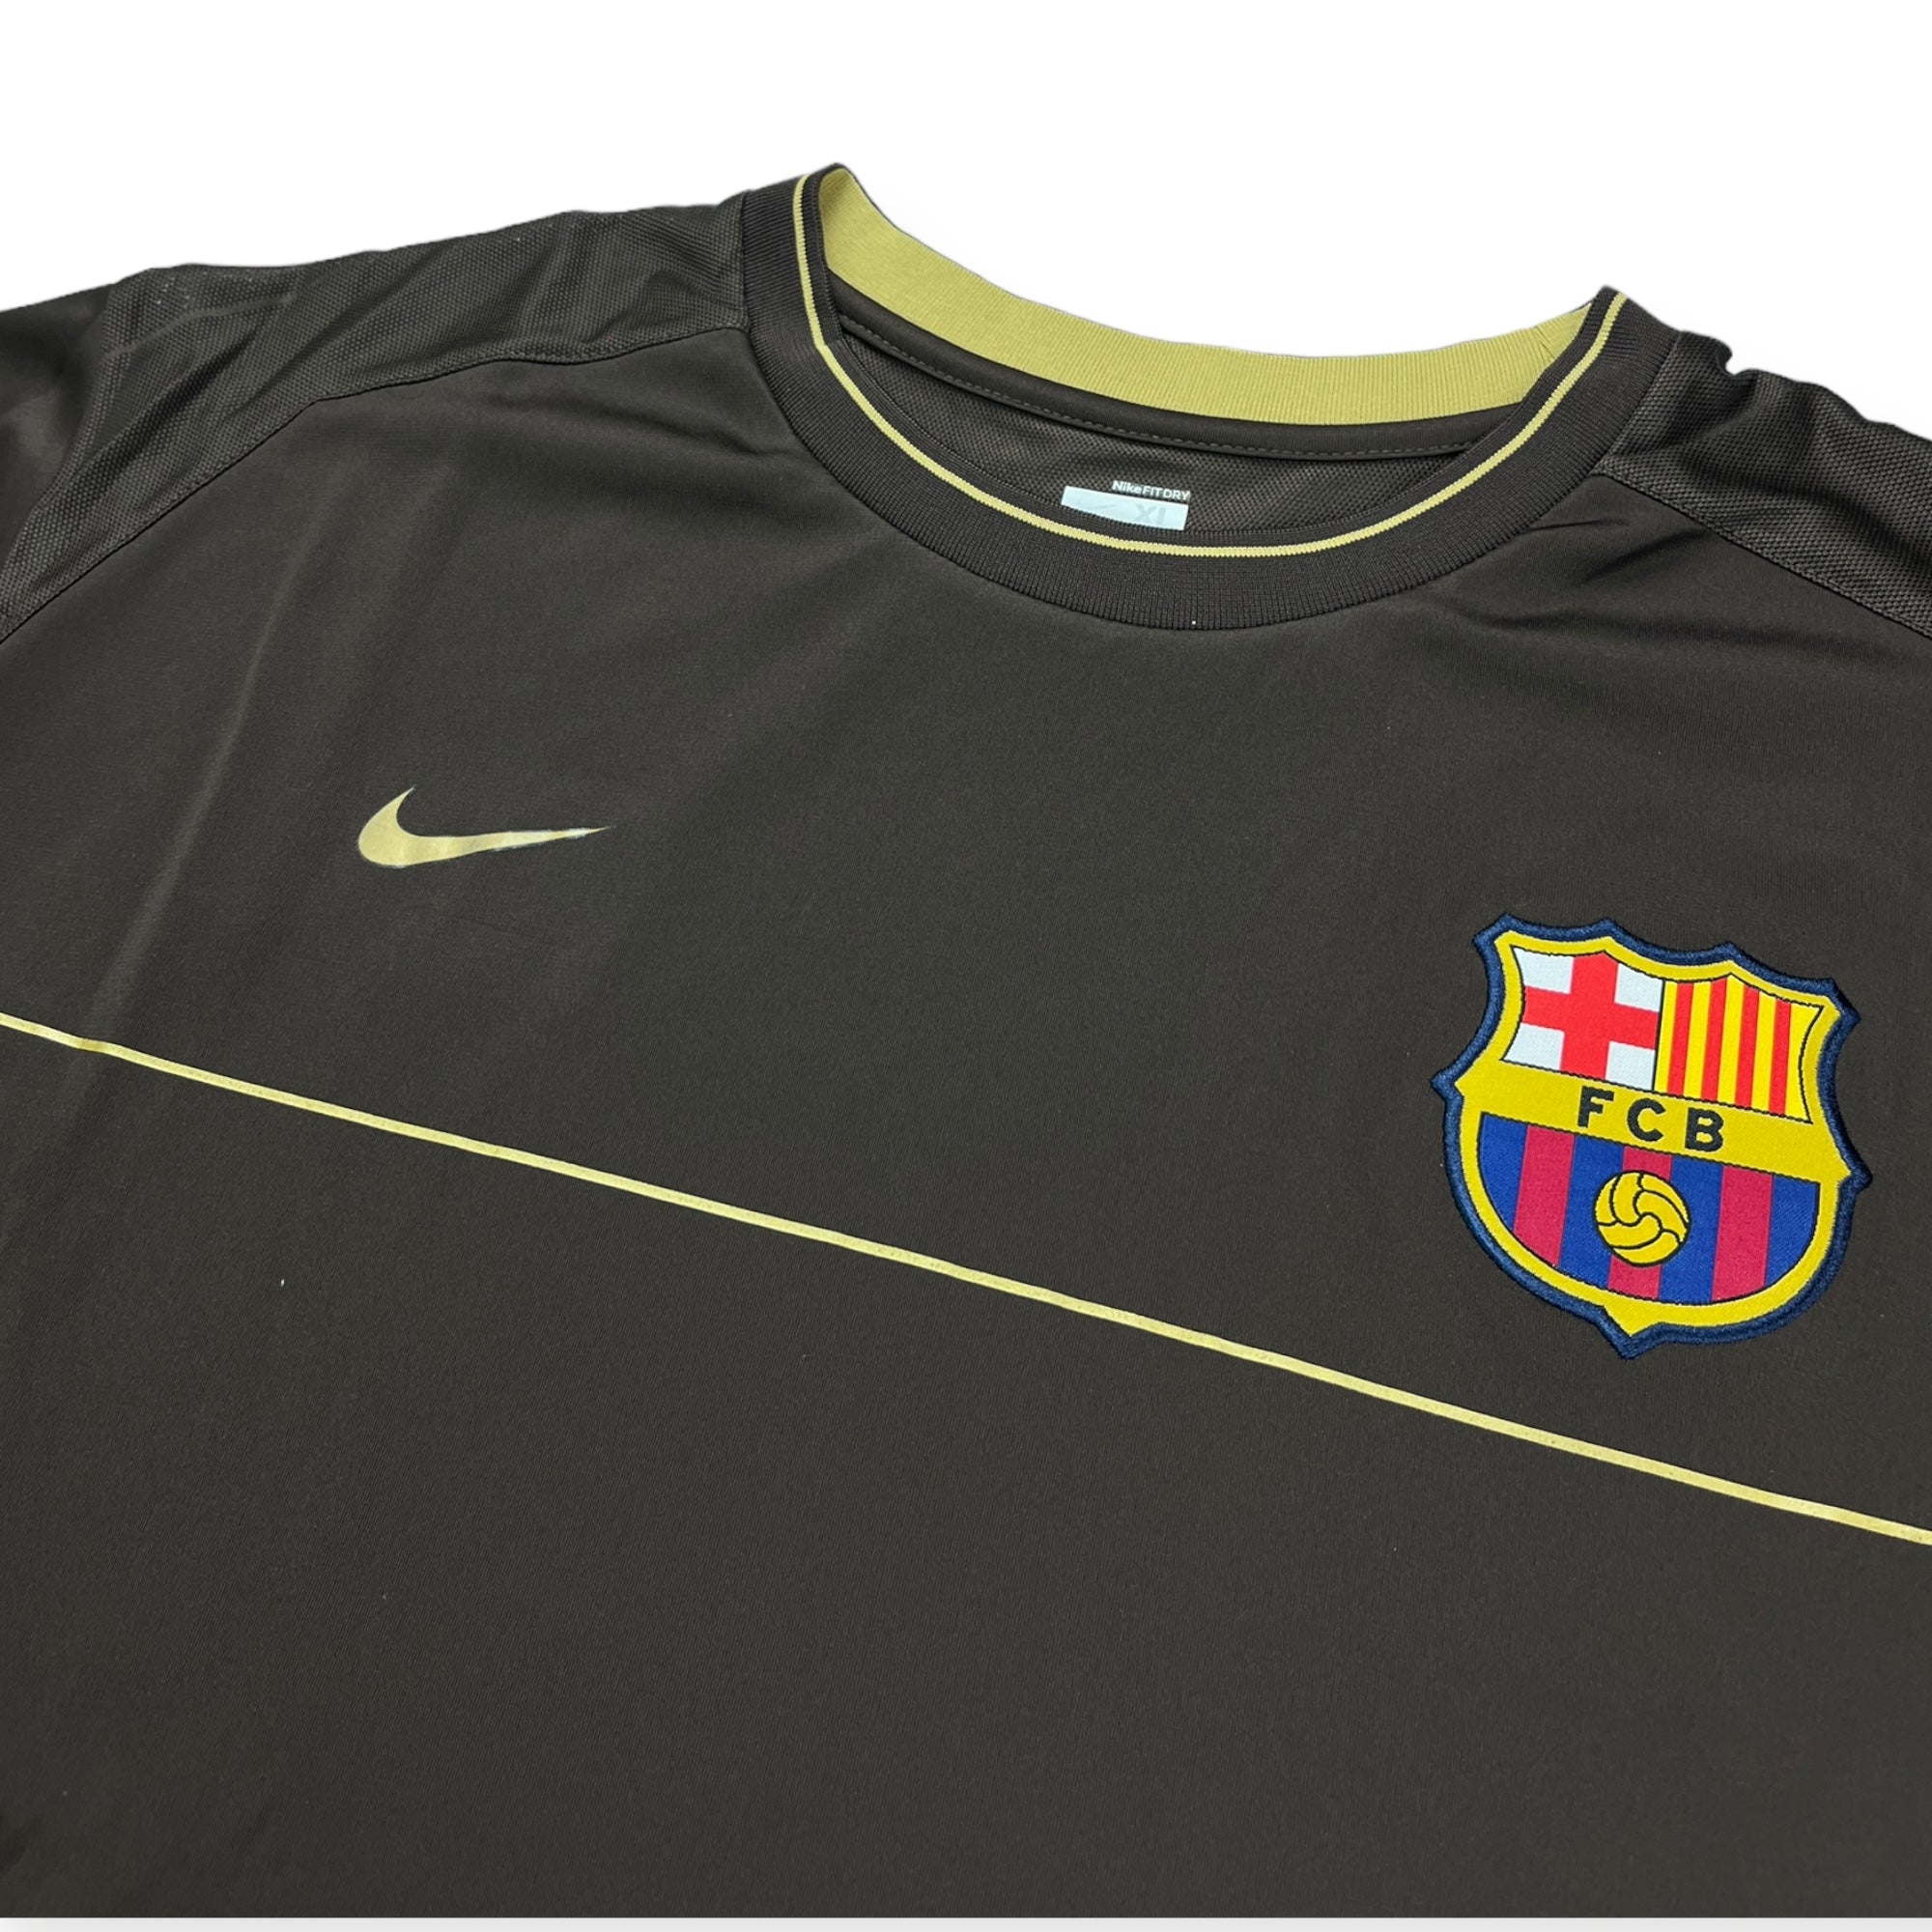 FC Barcelona 2008 Long Sleeve Training Shirt, BNWT